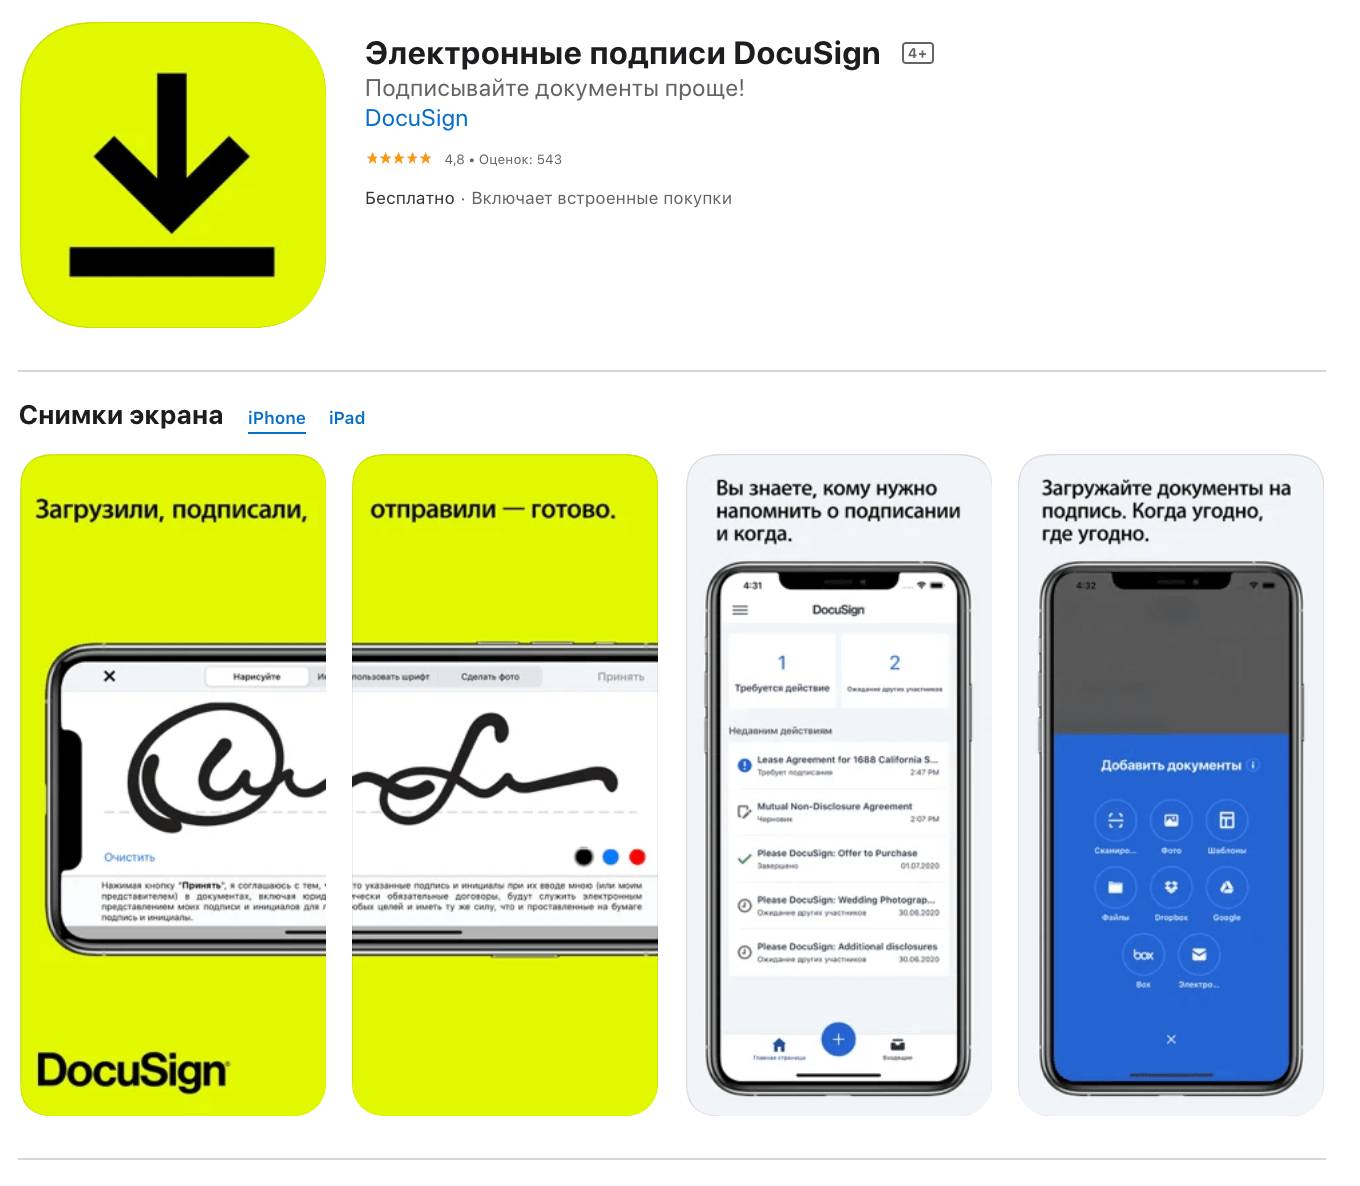 DocuSign-mobile app